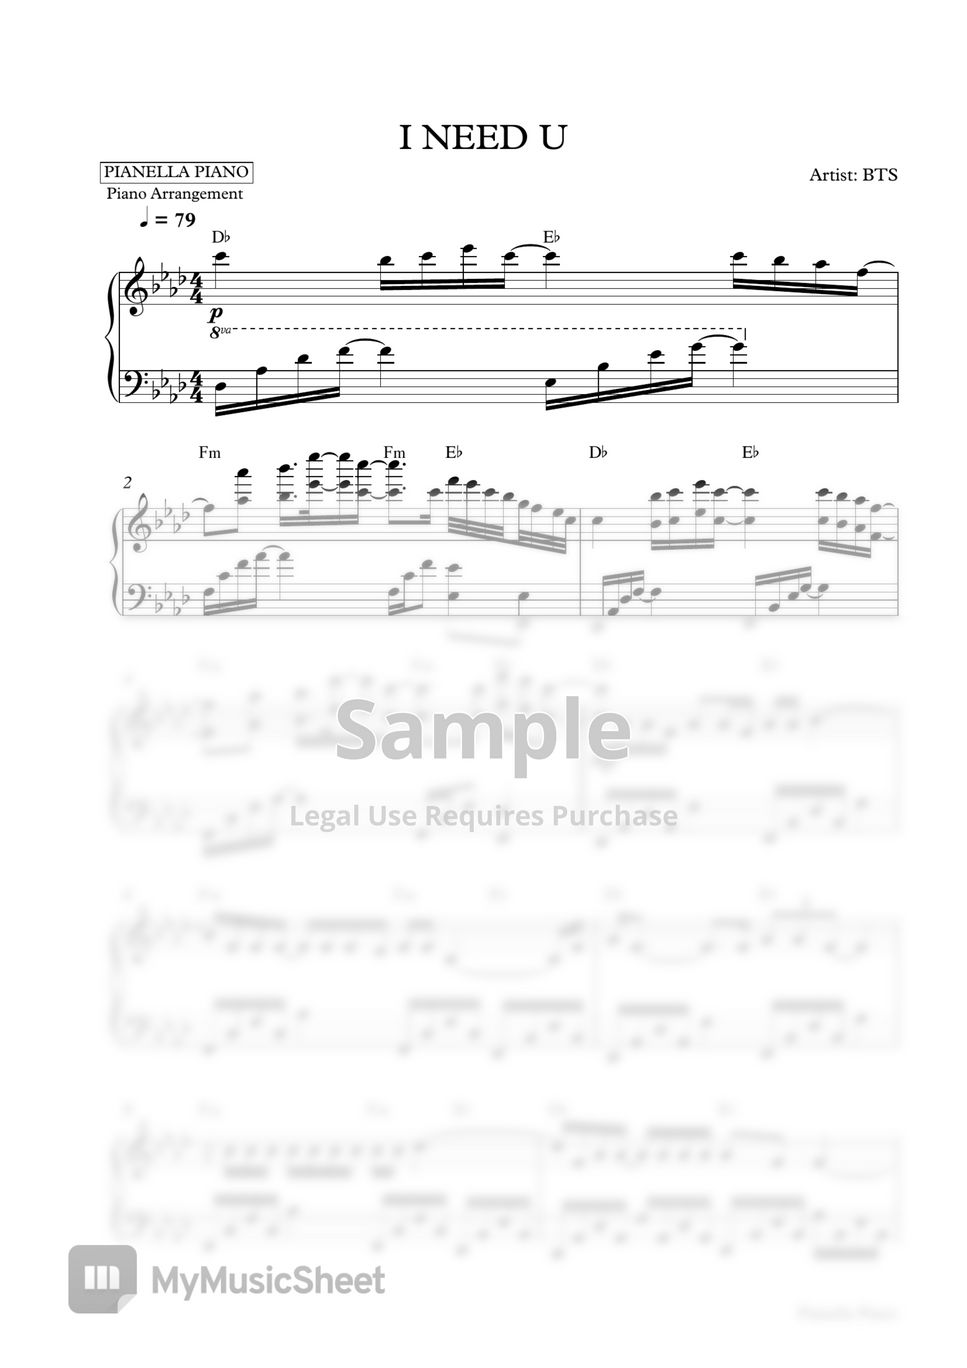 BTS - I NEED U (Piano Sheet) by Pianella Piano